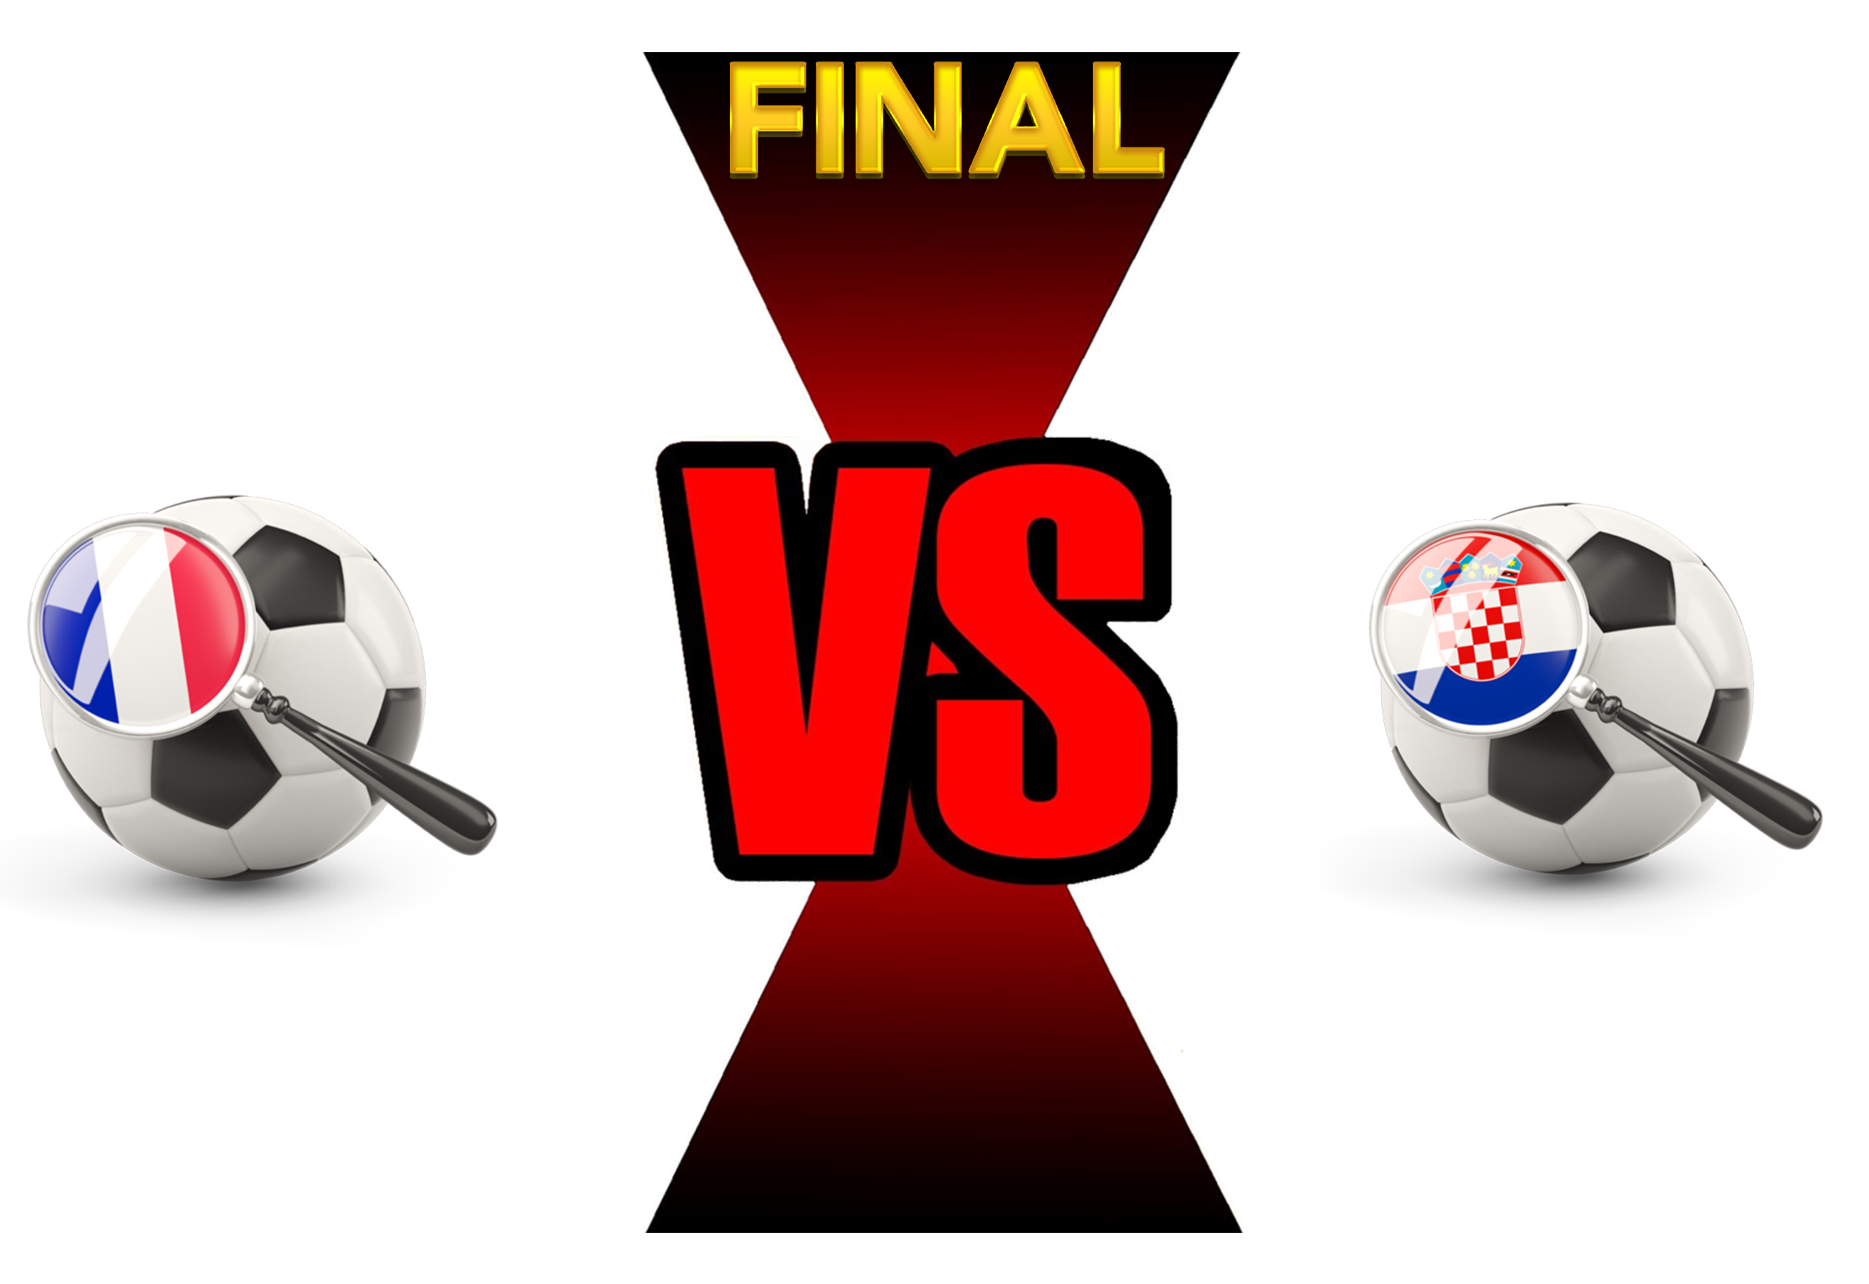 FIFA World Cup 2018 Final Match France VS Croatia PNG Image